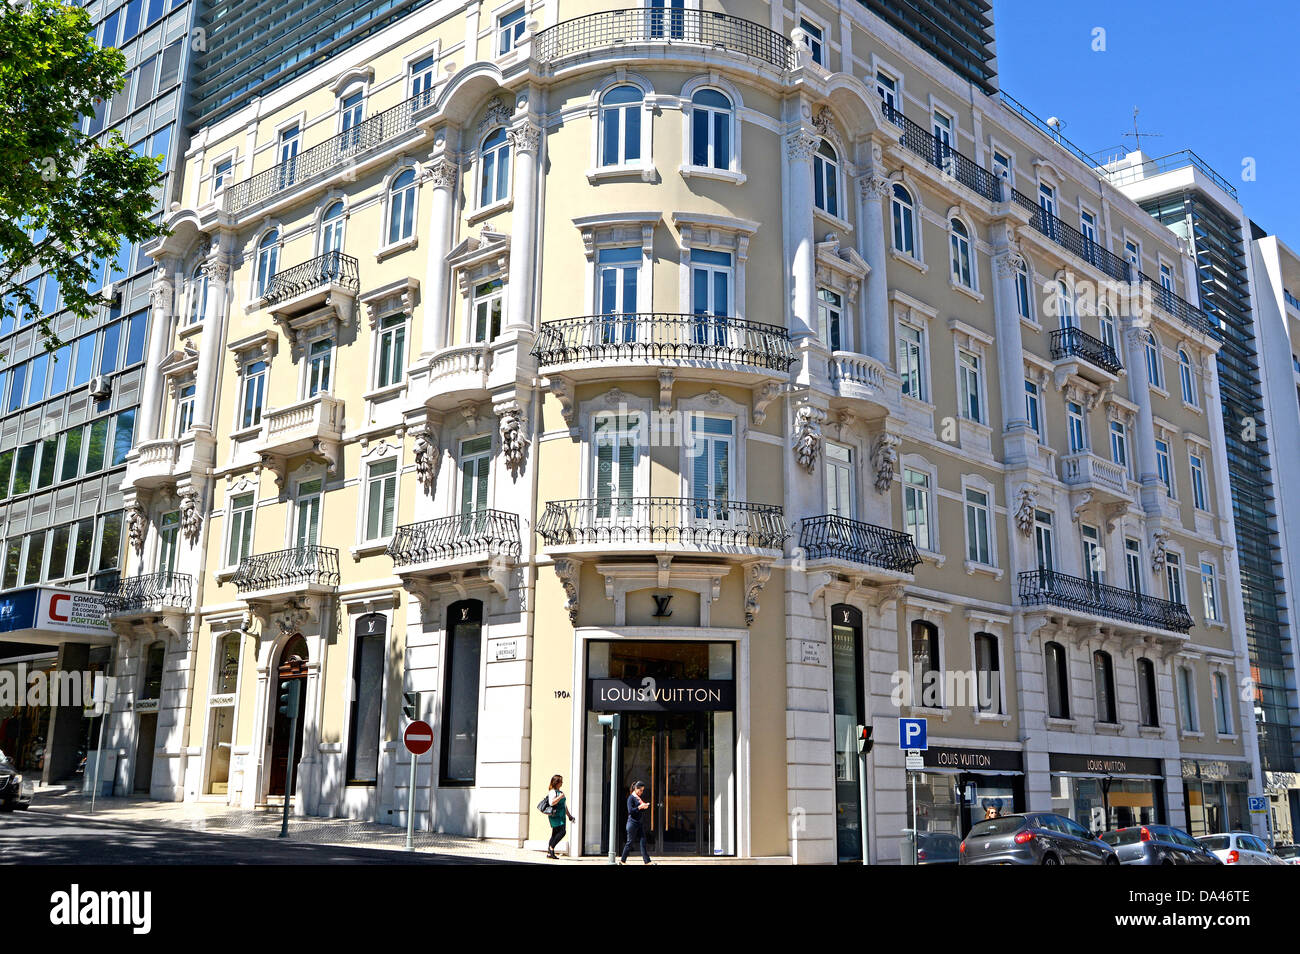 Victor enhed Insister Louis Vuitton Boutique Lissabon Portugal Stockfotografie - Alamy